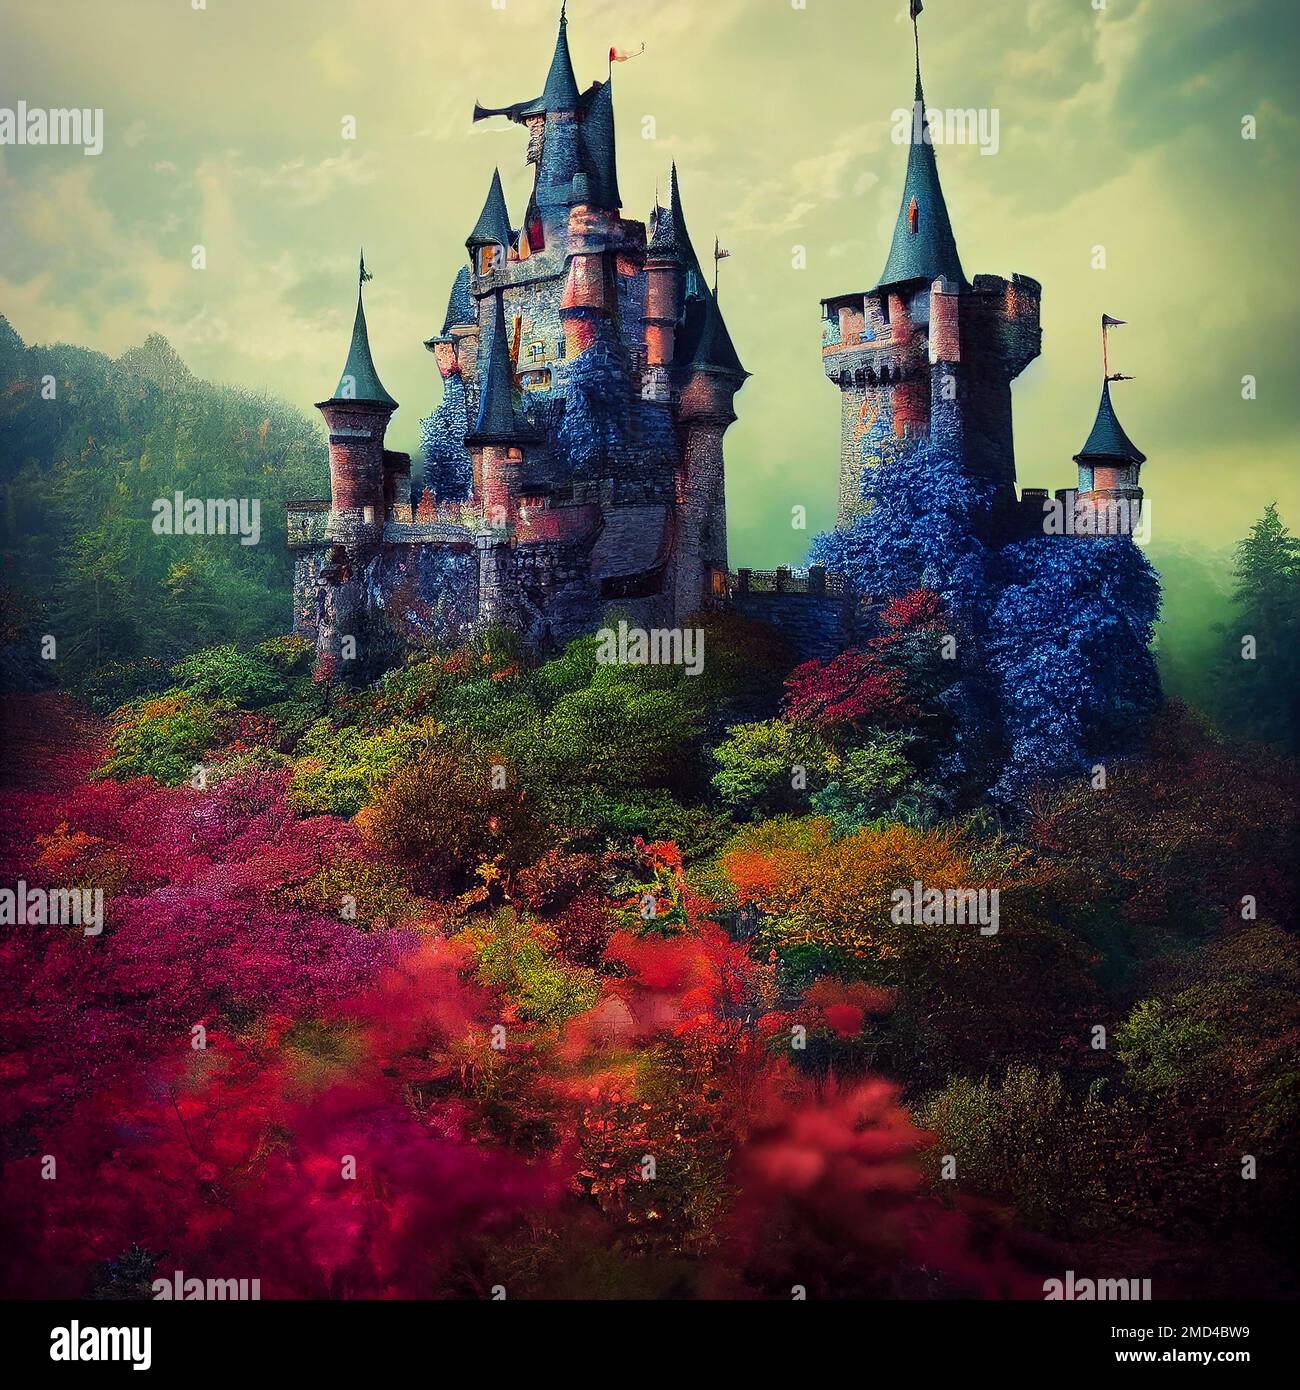 Fairytale castle on magical landscape Stock Photo